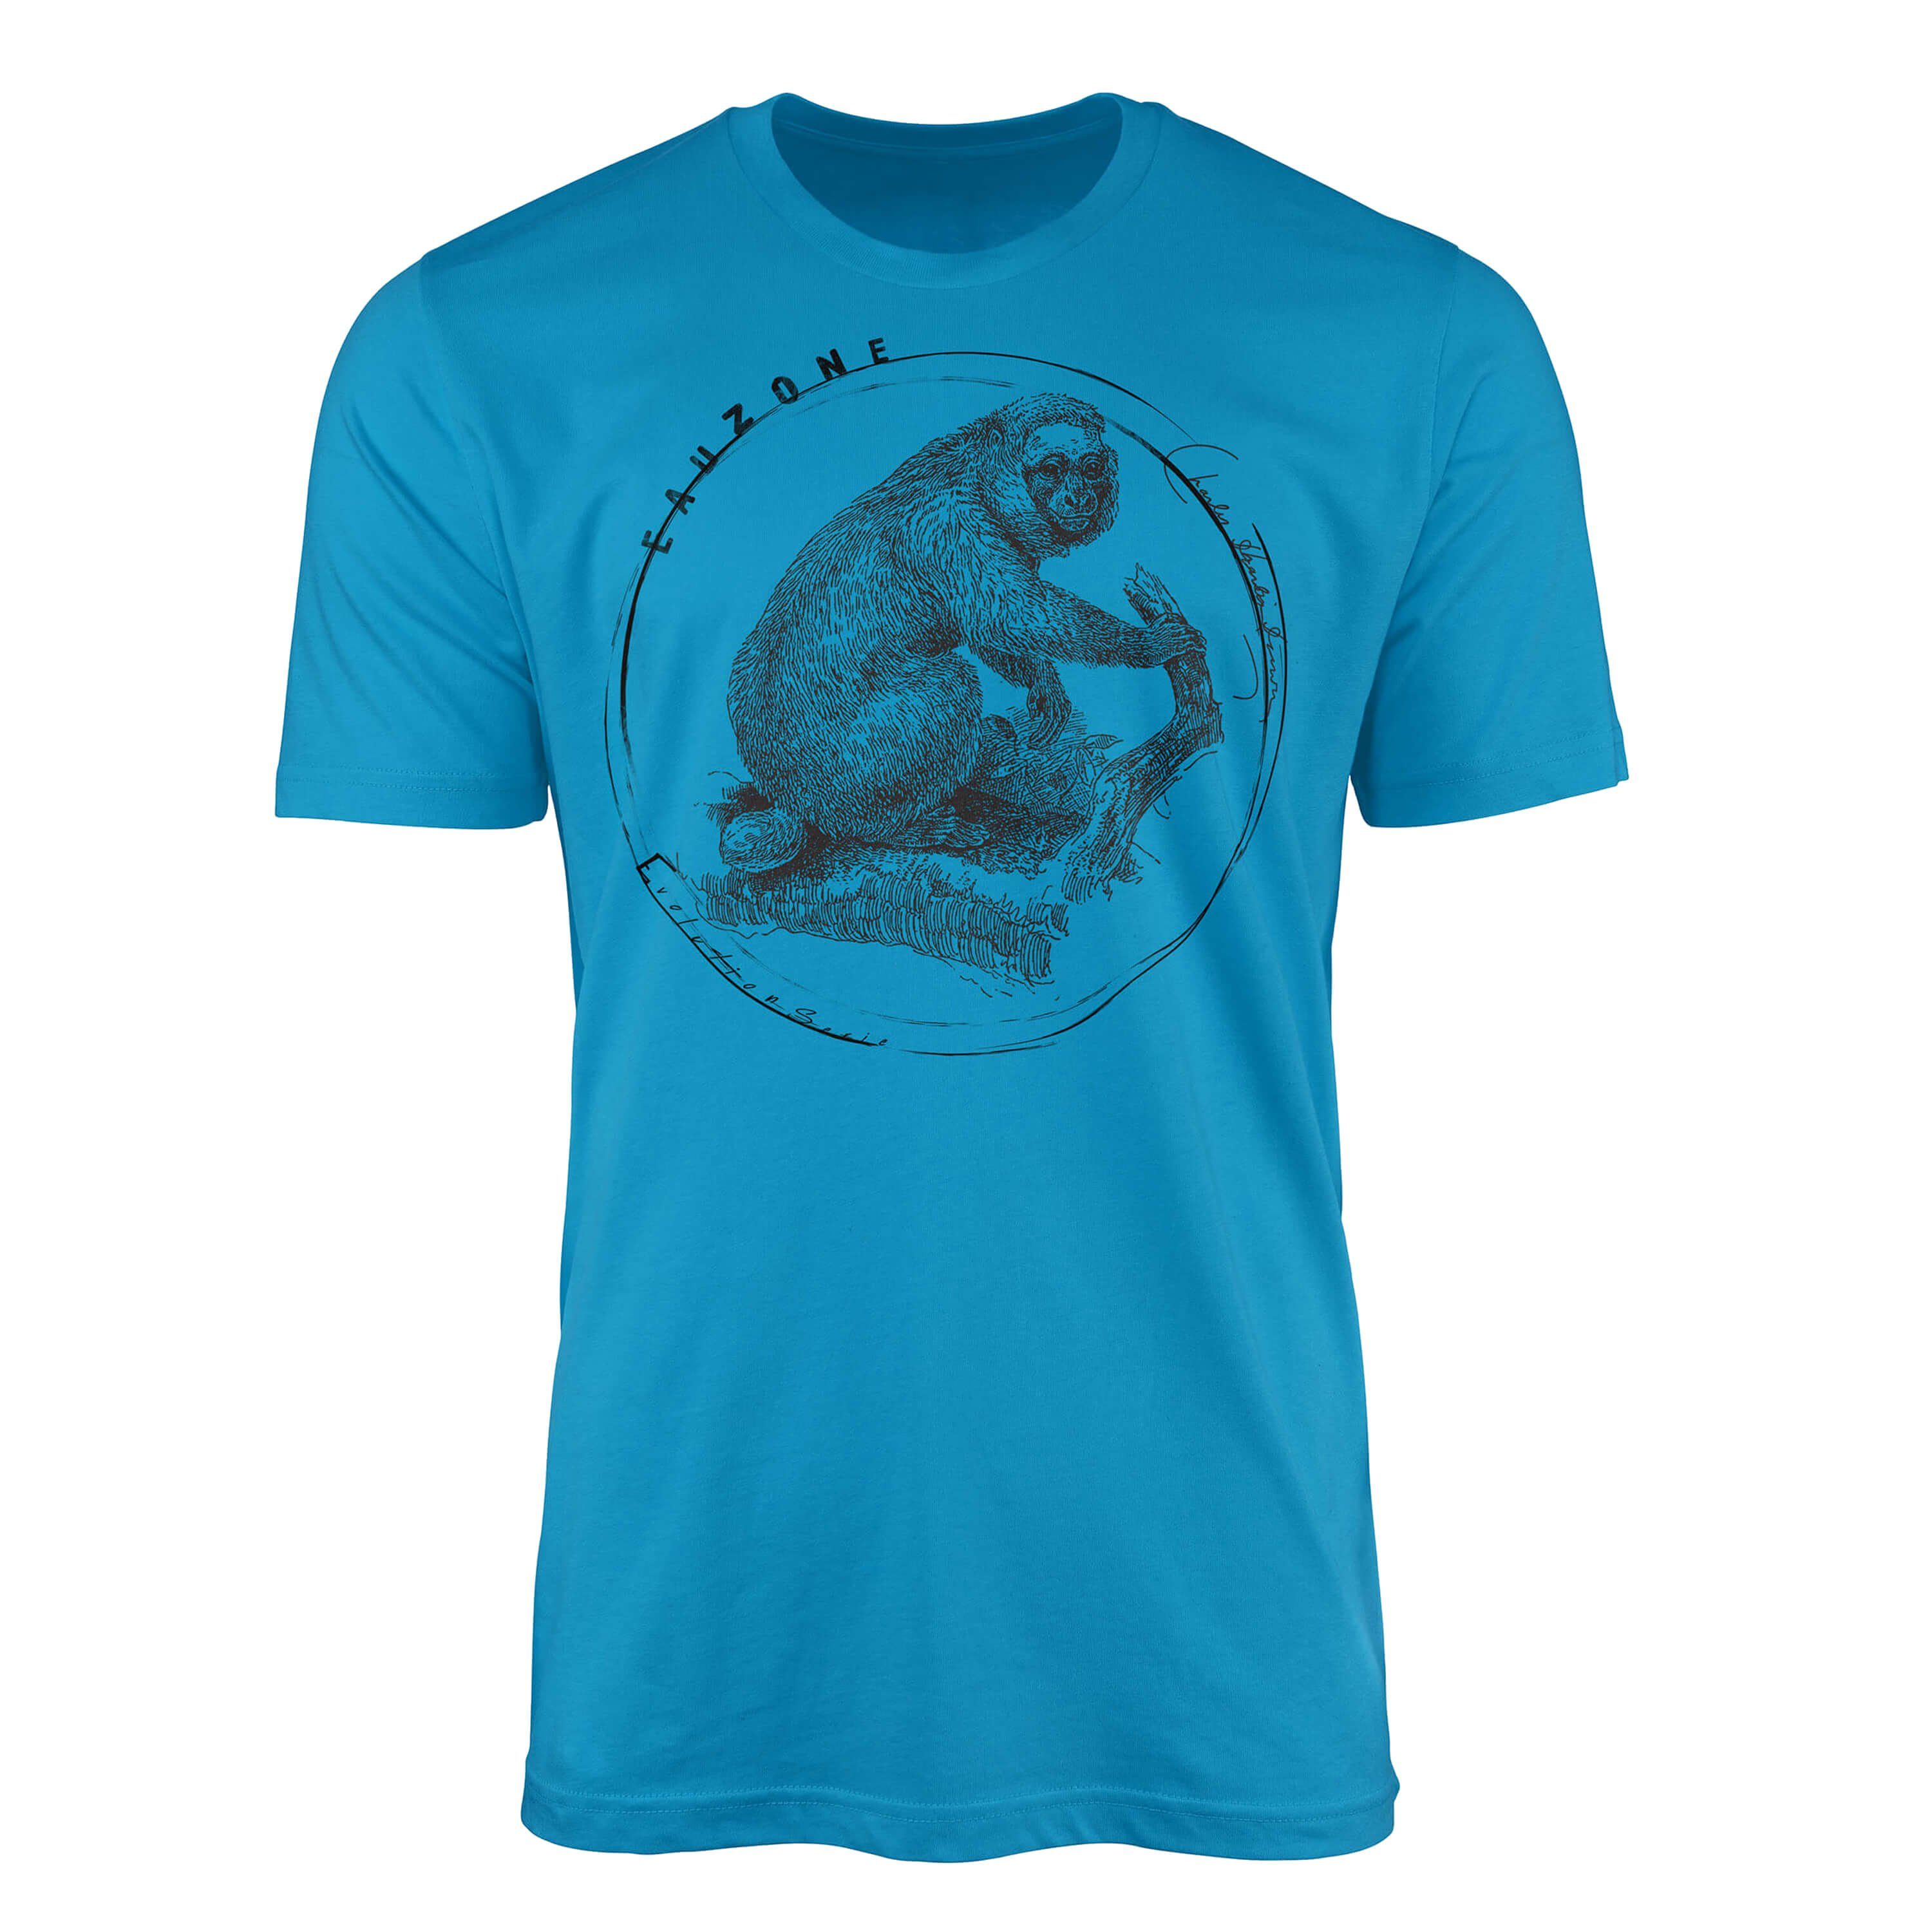 Art Kahlkopf-Saki Sinus Evolution Herren Atoll T-Shirt T-Shirt